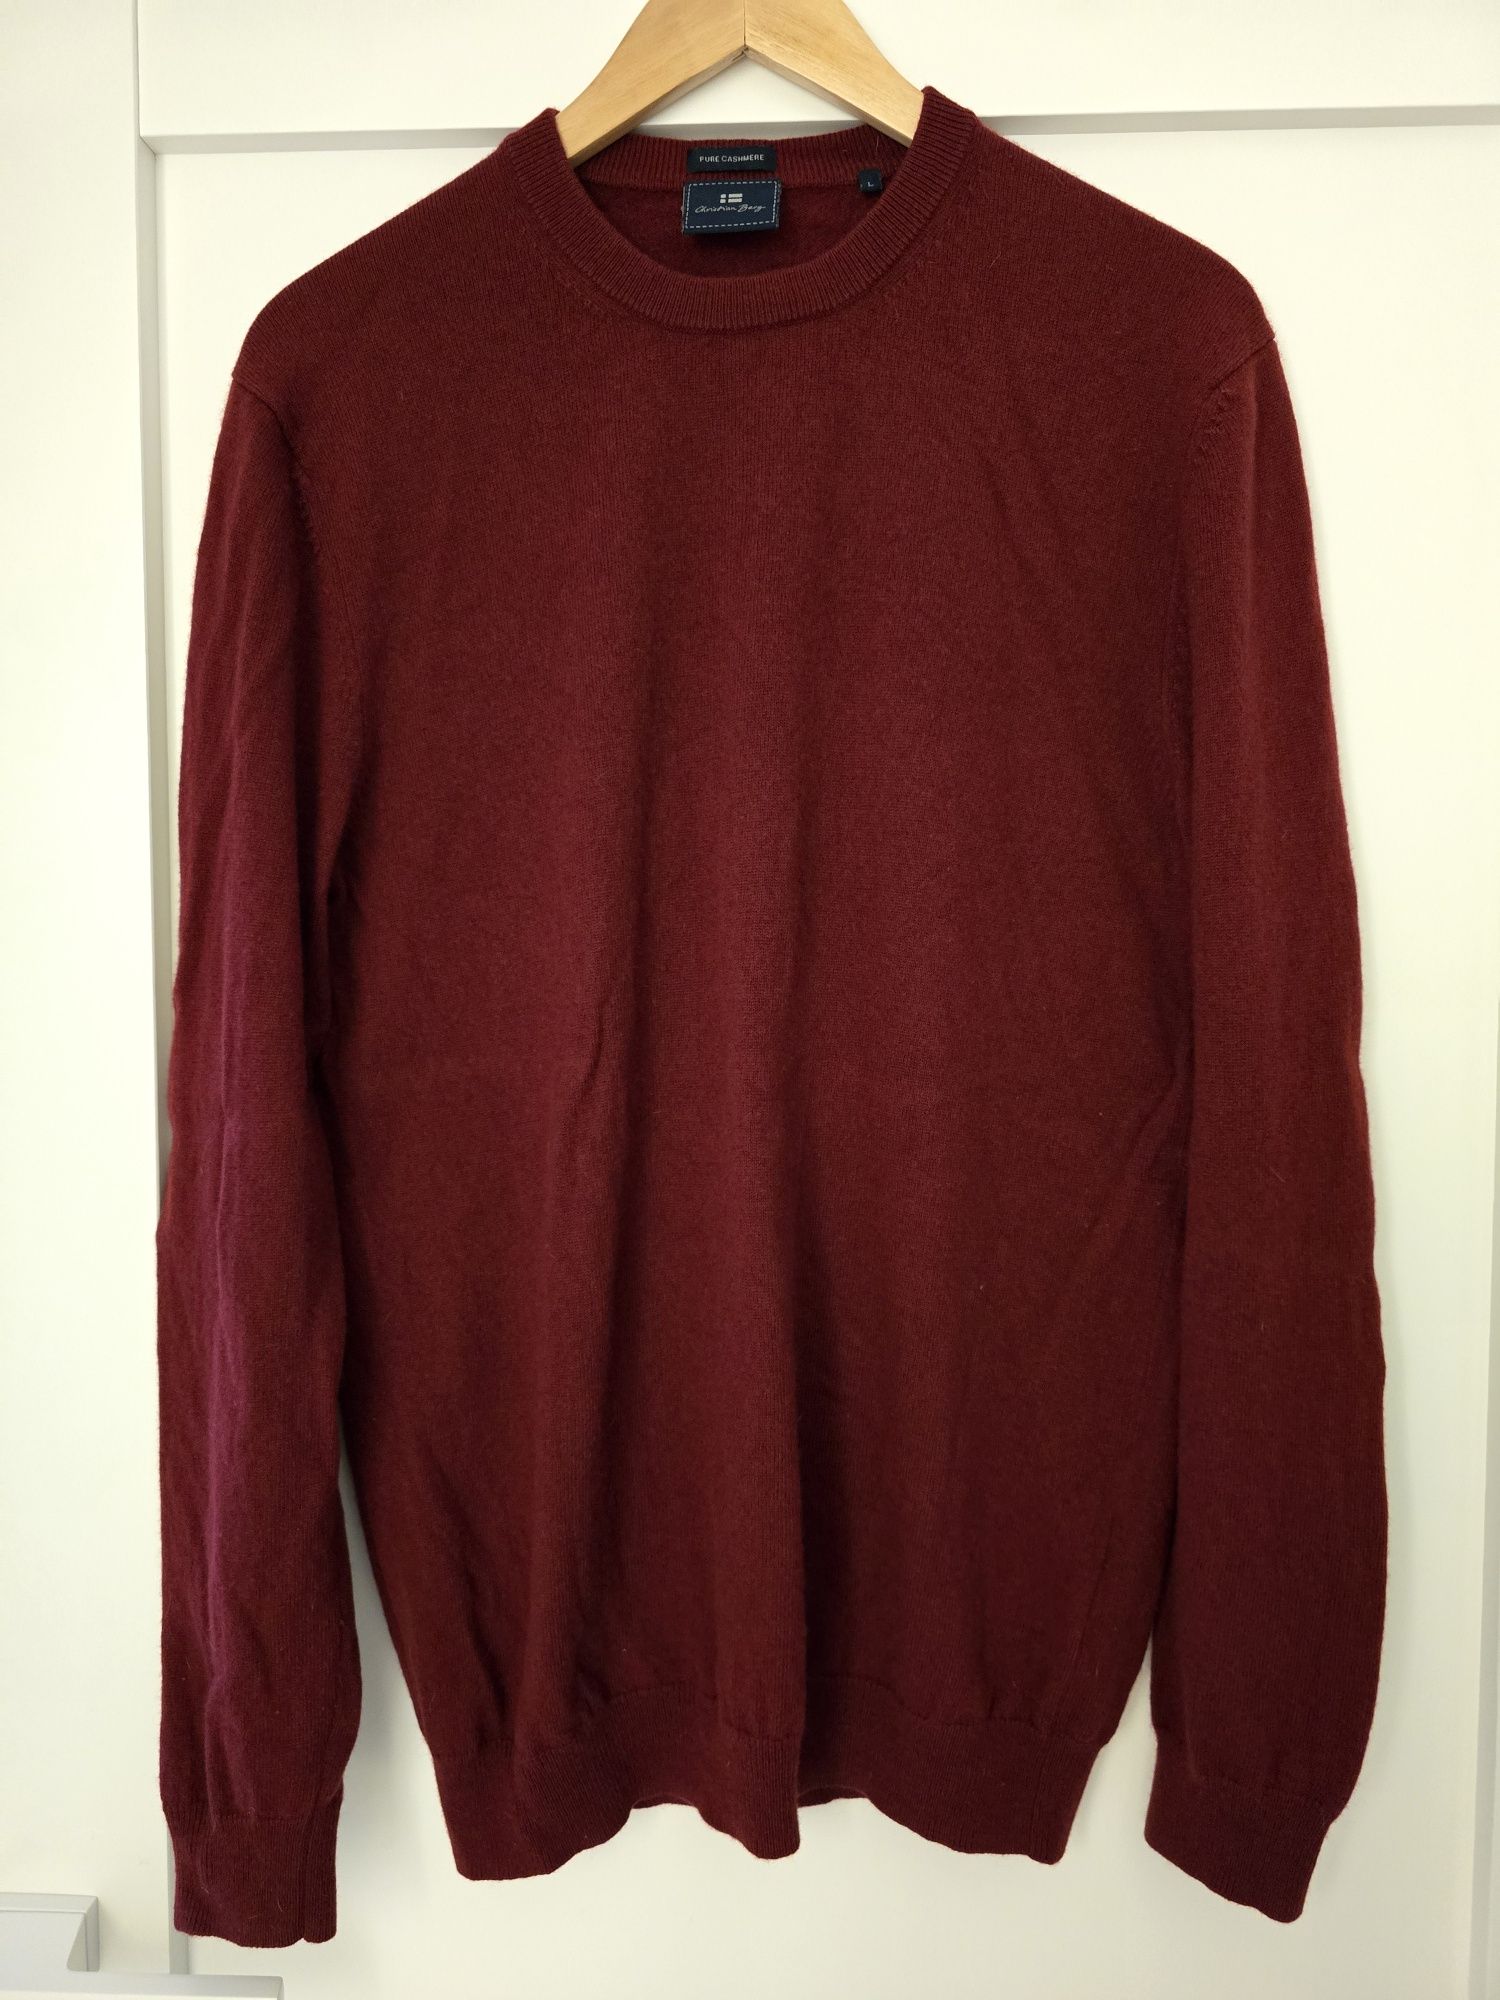 Kaszmirowy sweter Christian Berg, roz. L, 100% kaszmir